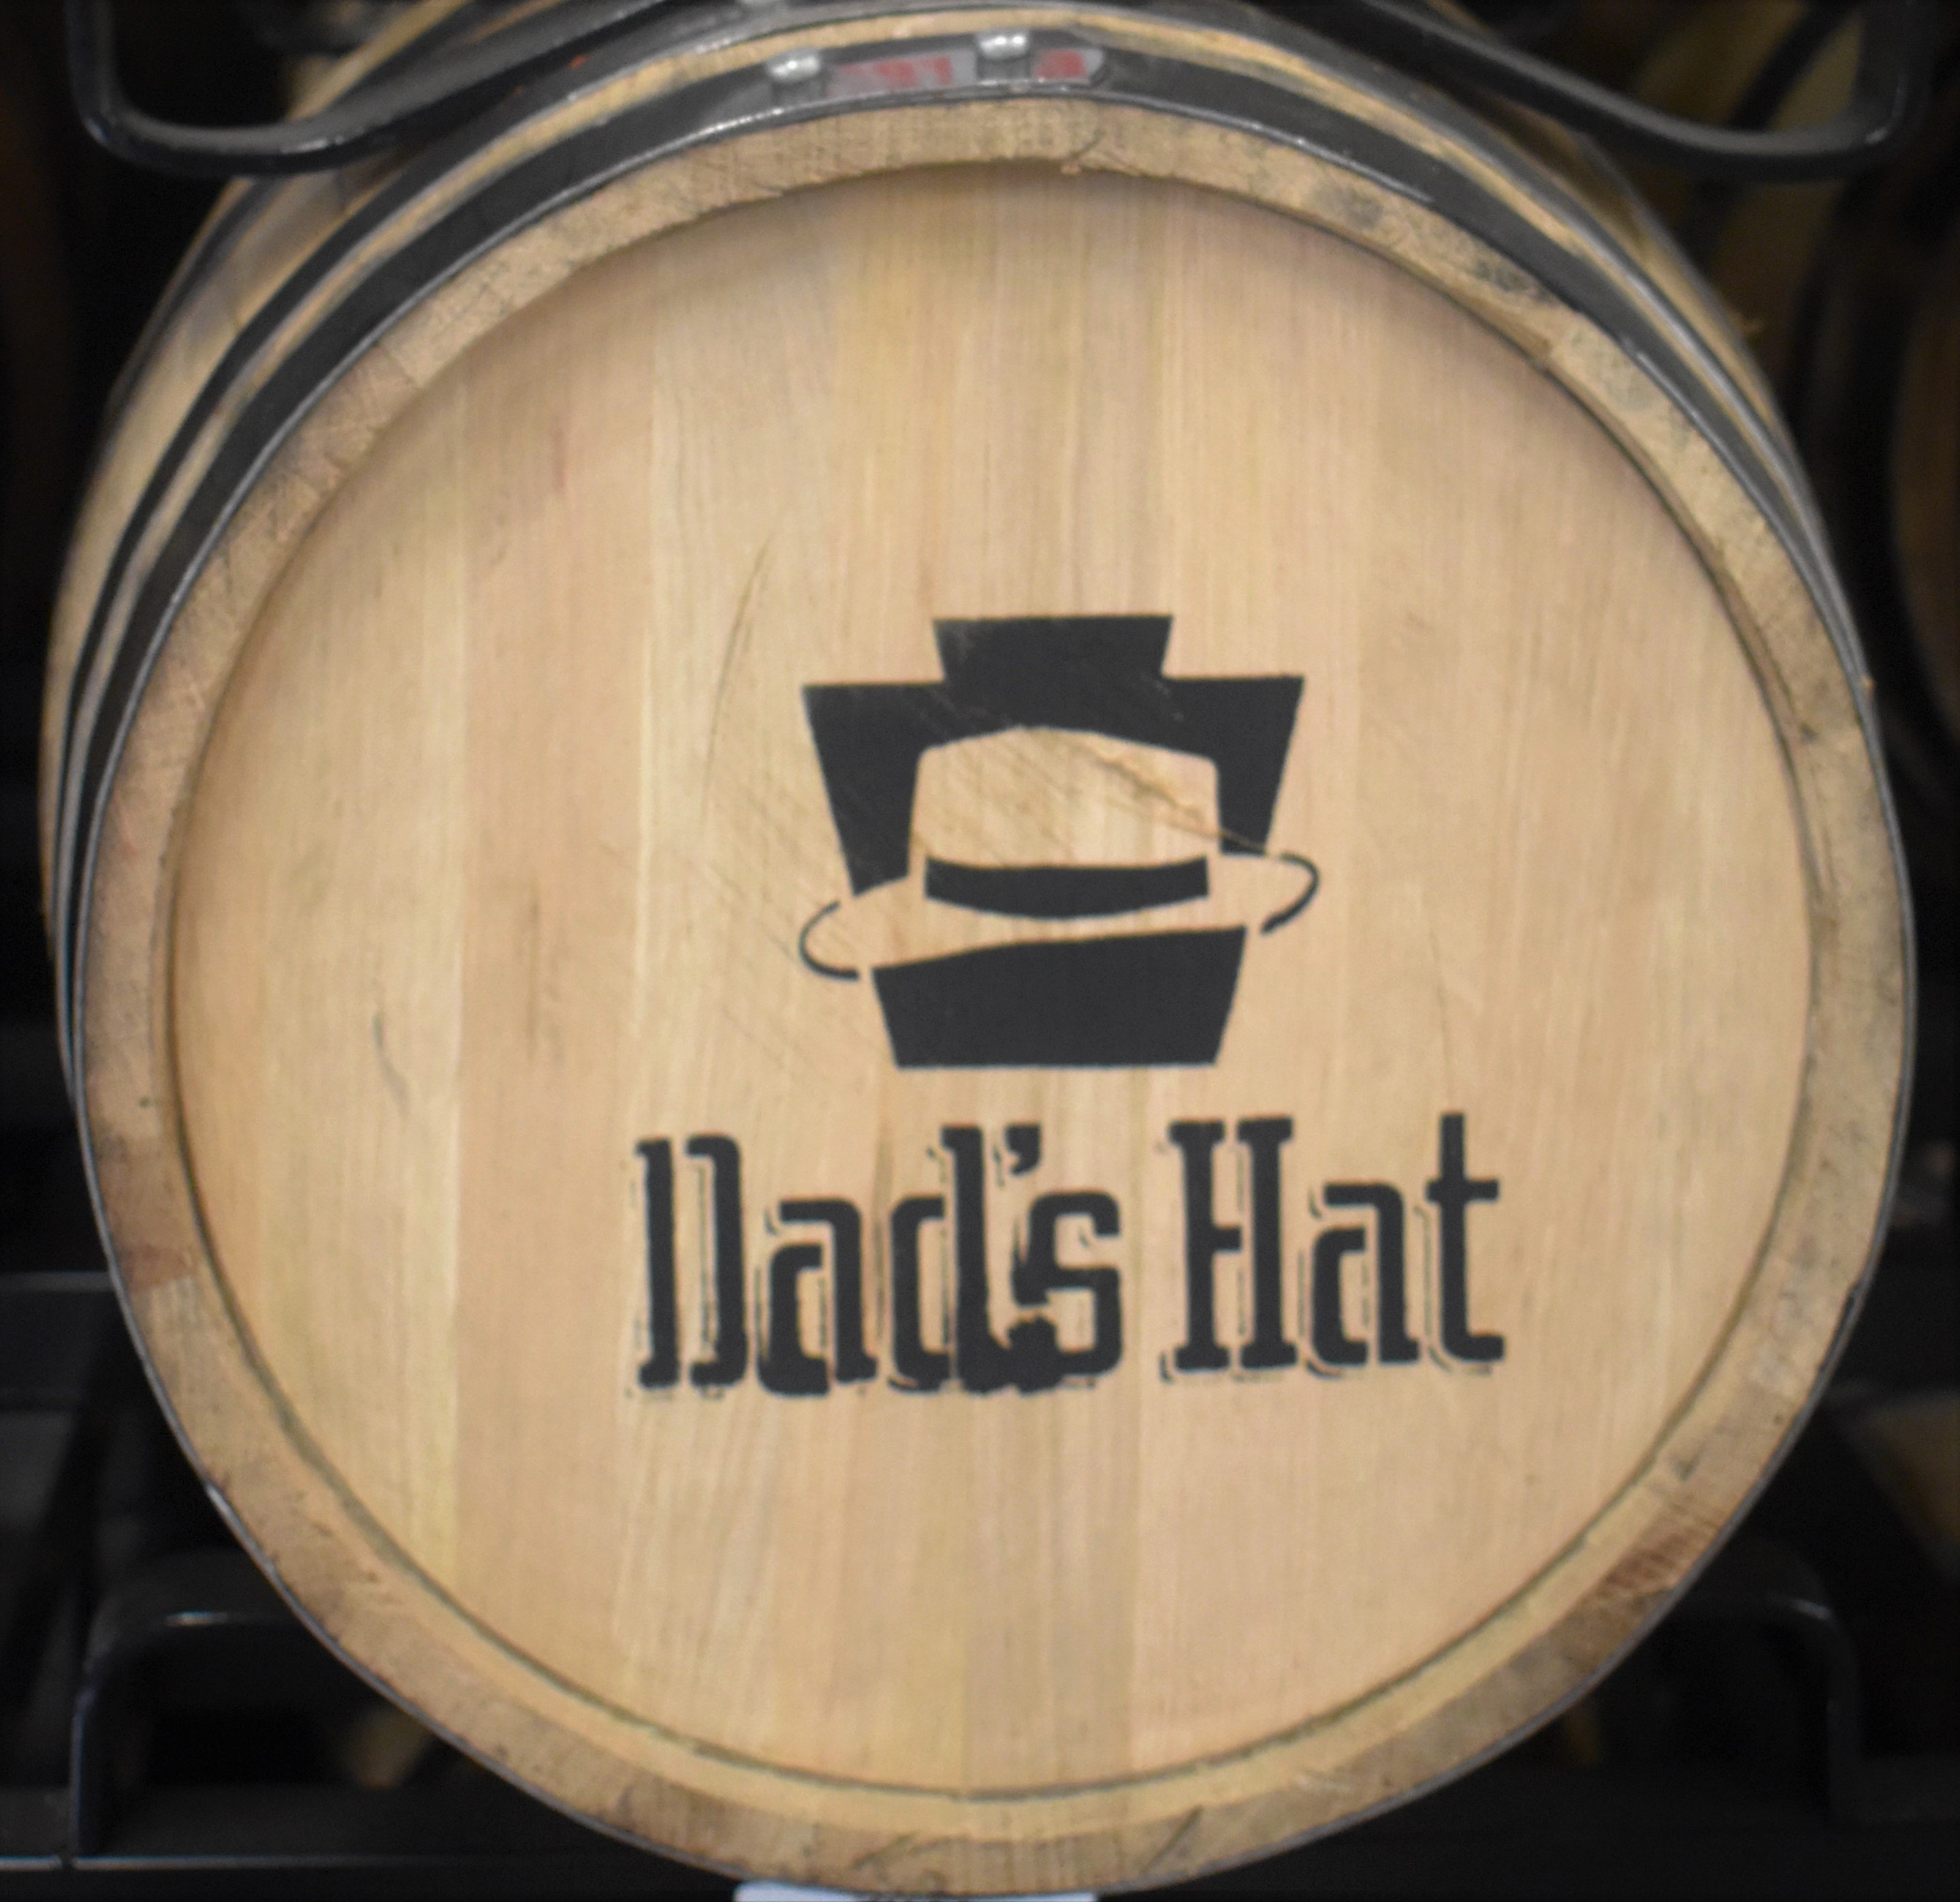 Dad’s Hat: an innovative Rye Whiskey distillery in Pennsylvania